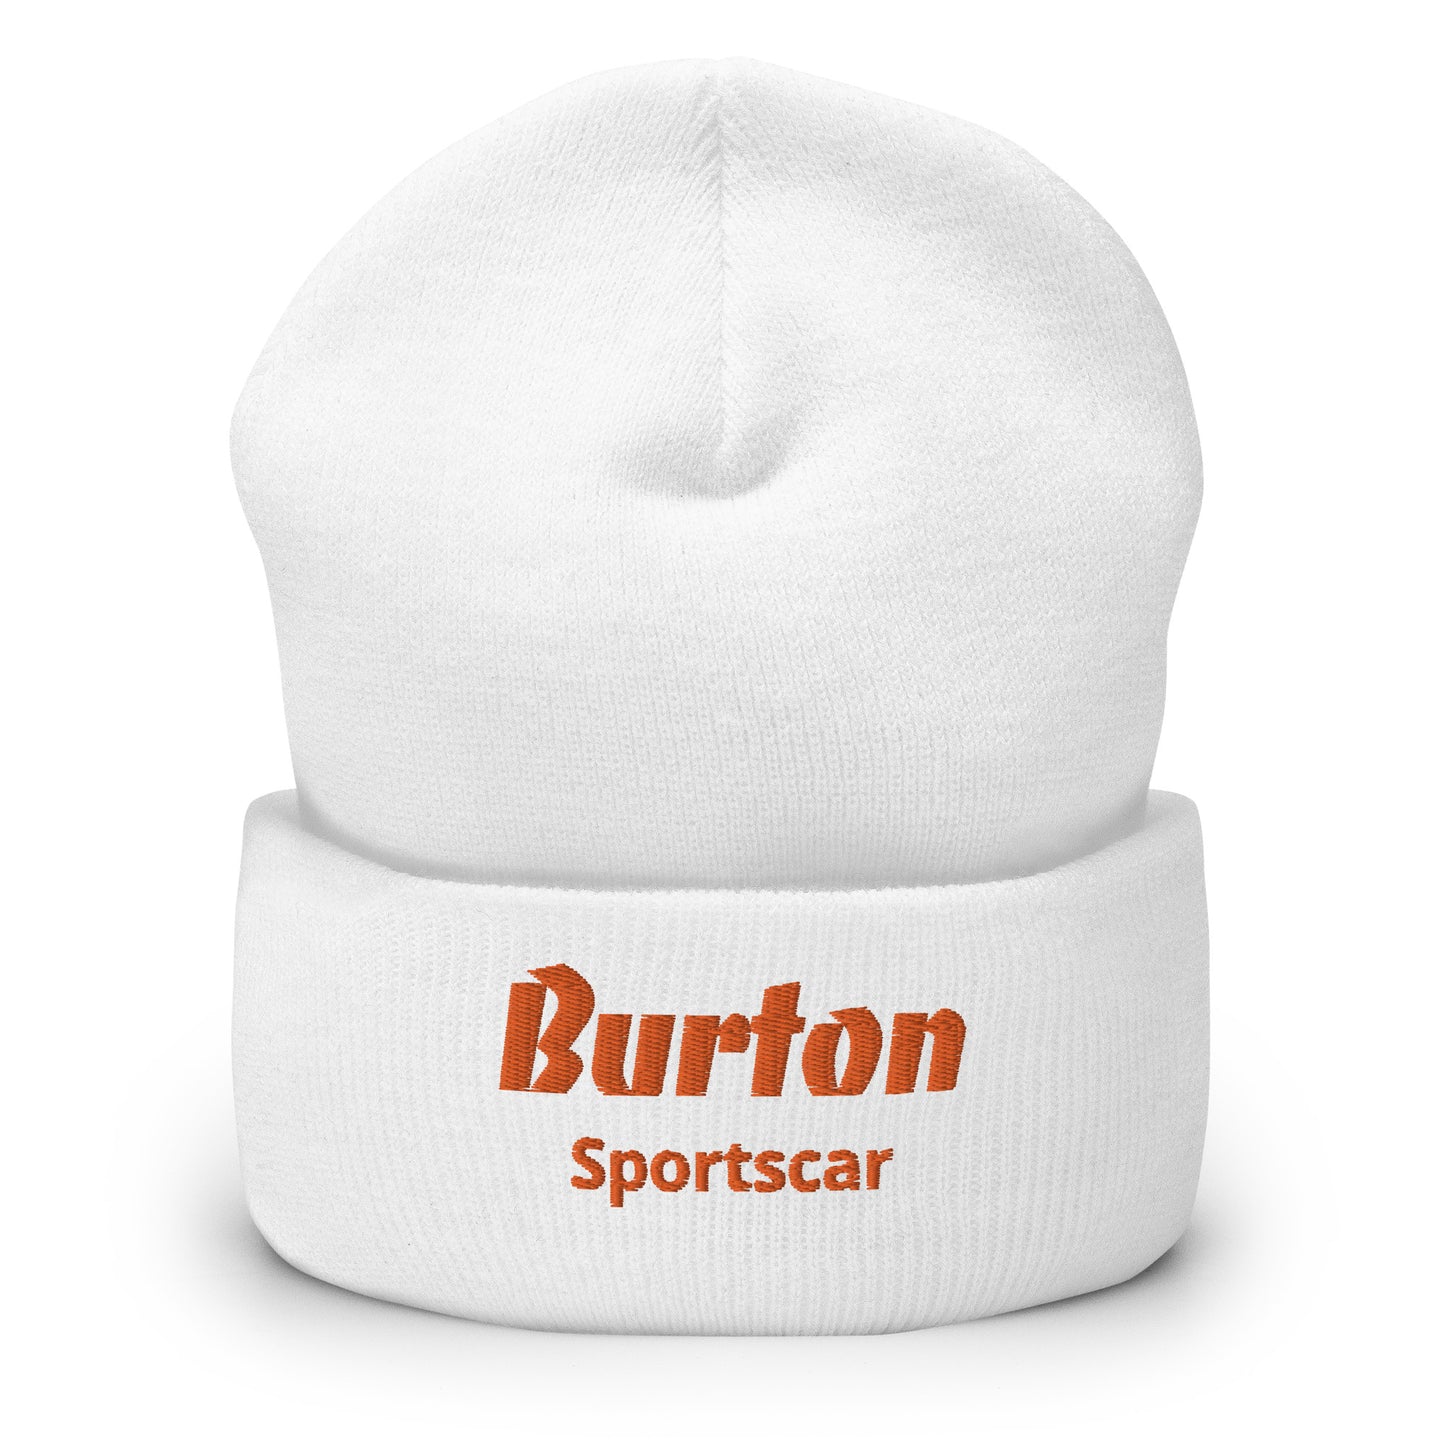 Burton Sportscar Beanie geborduurd met omgeslagen rand - Zwart, Blauw, Grijs of Wit